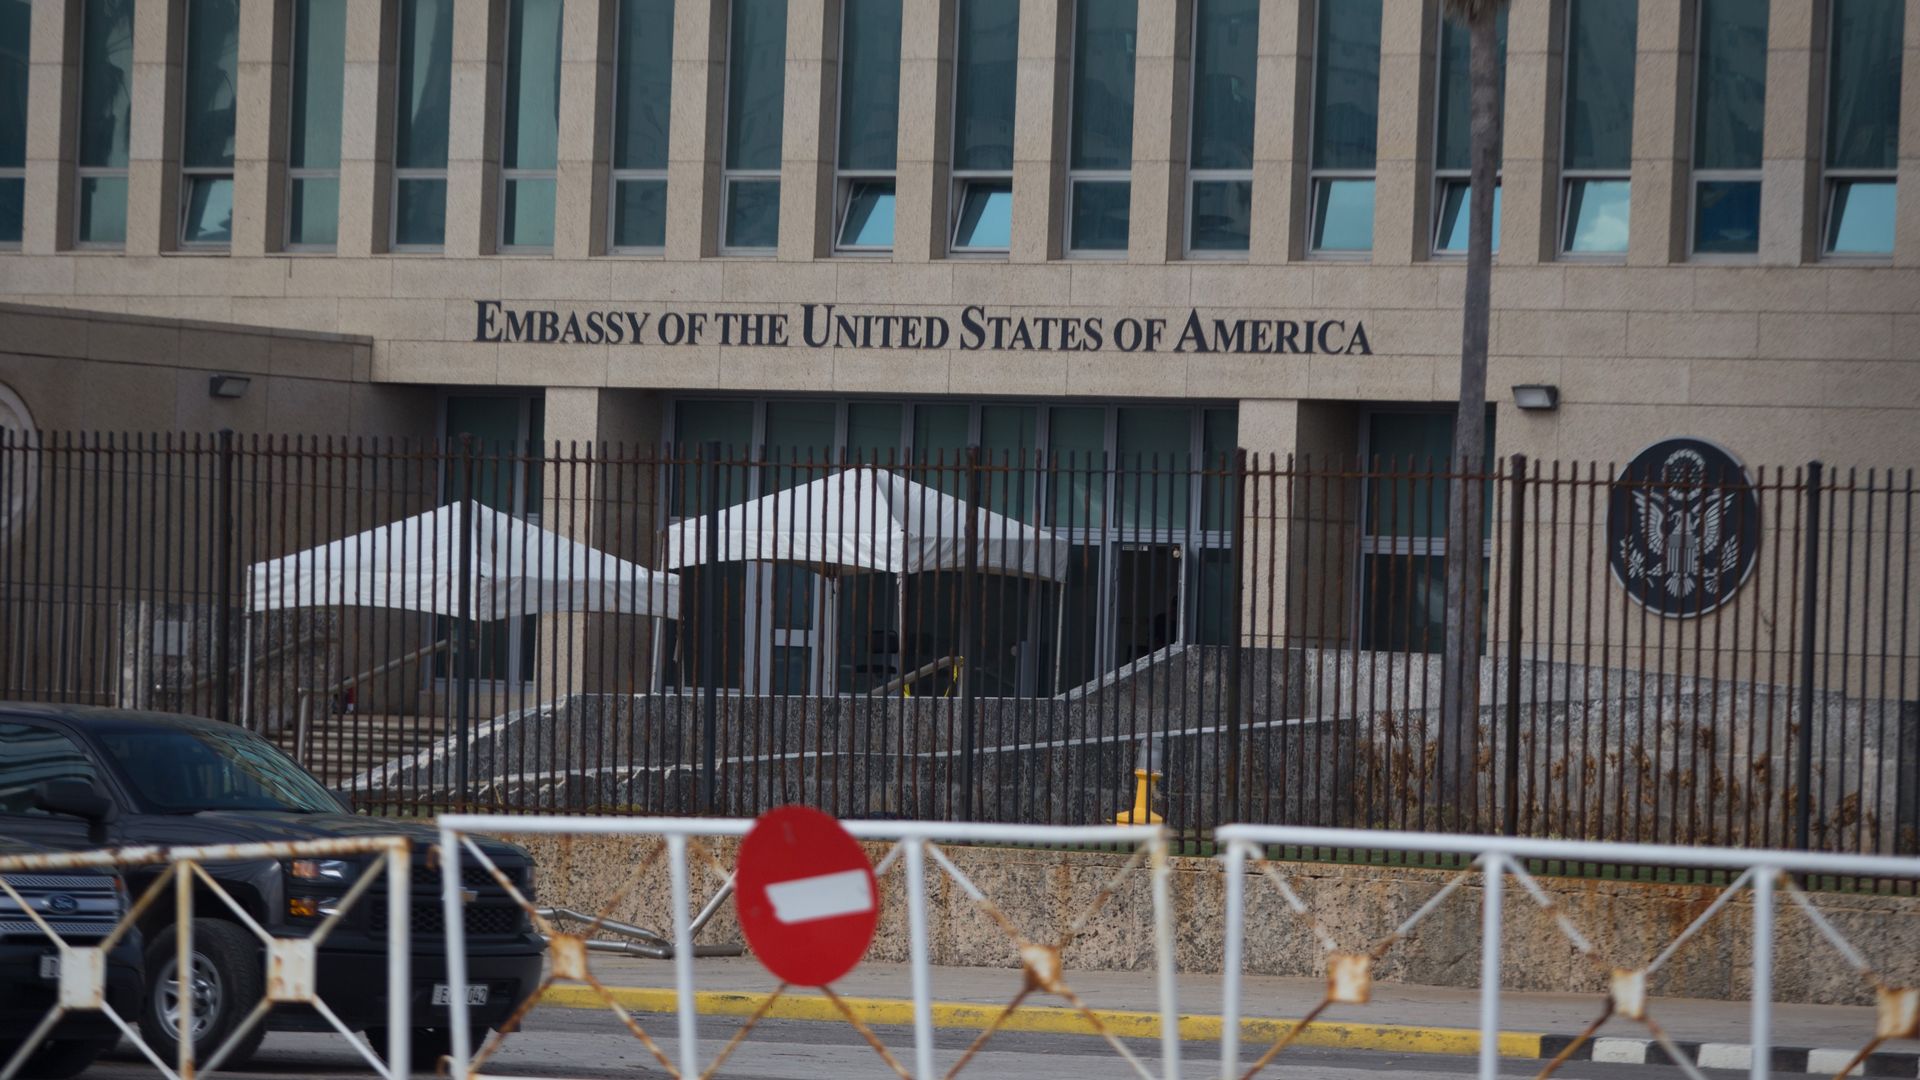 View of U.S. embassy in Cuba